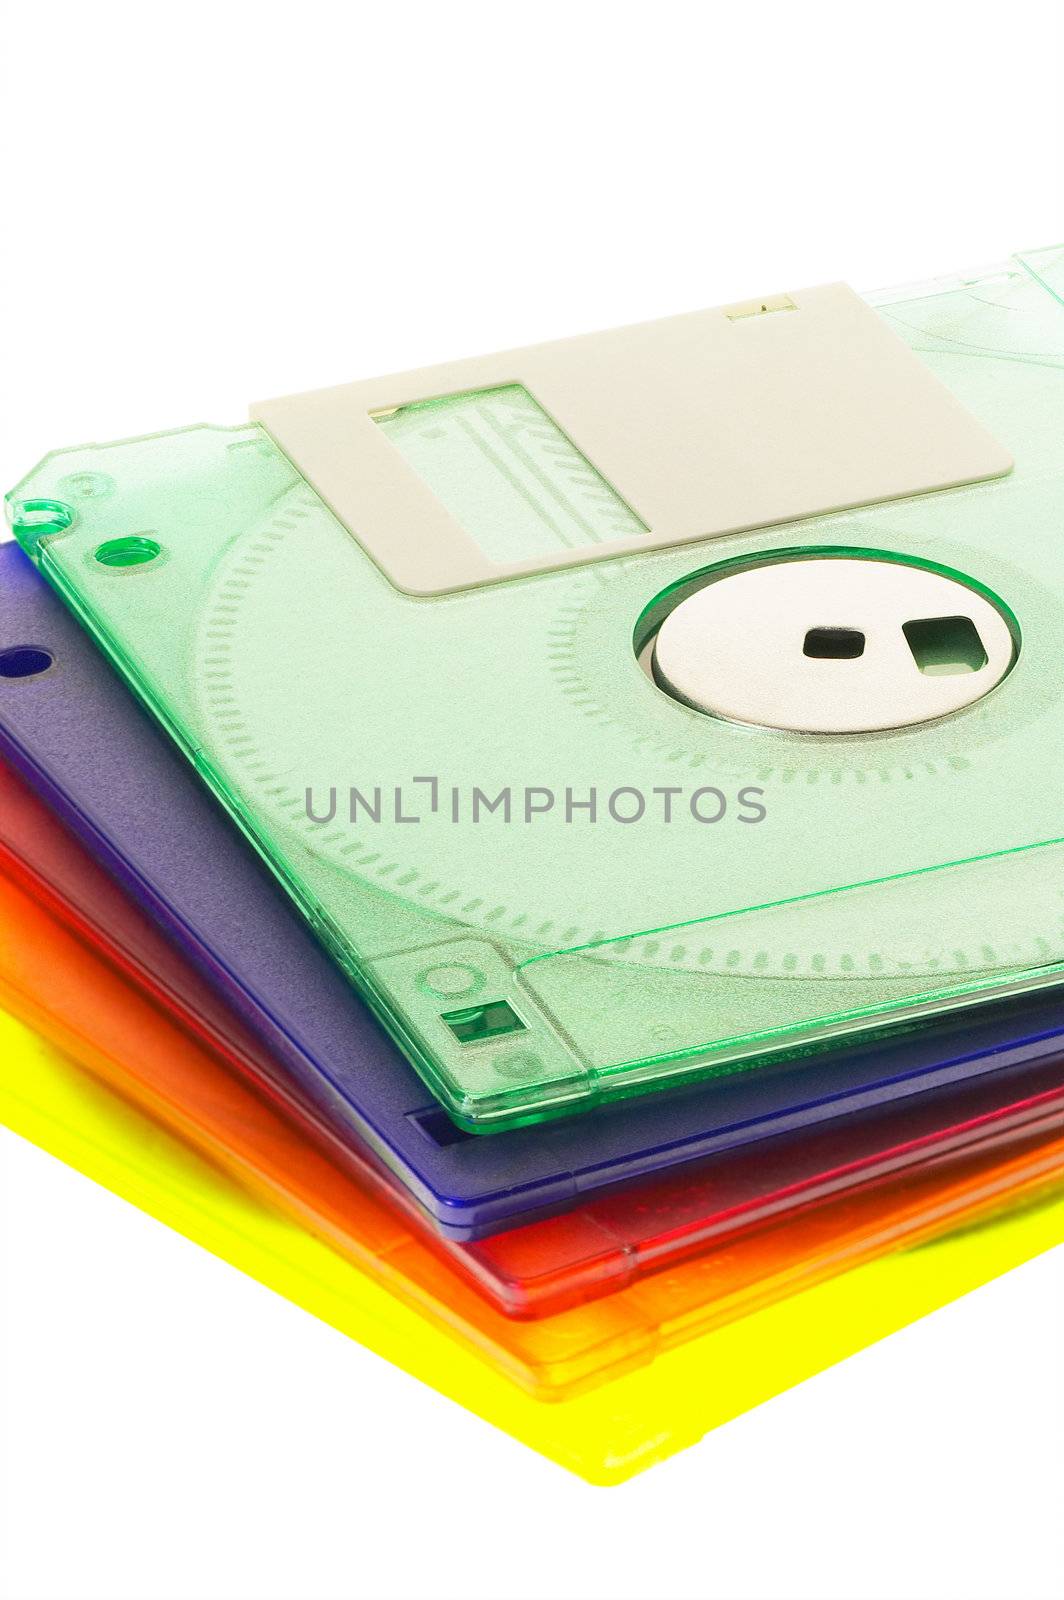 coulorfull floppy disk by keko64